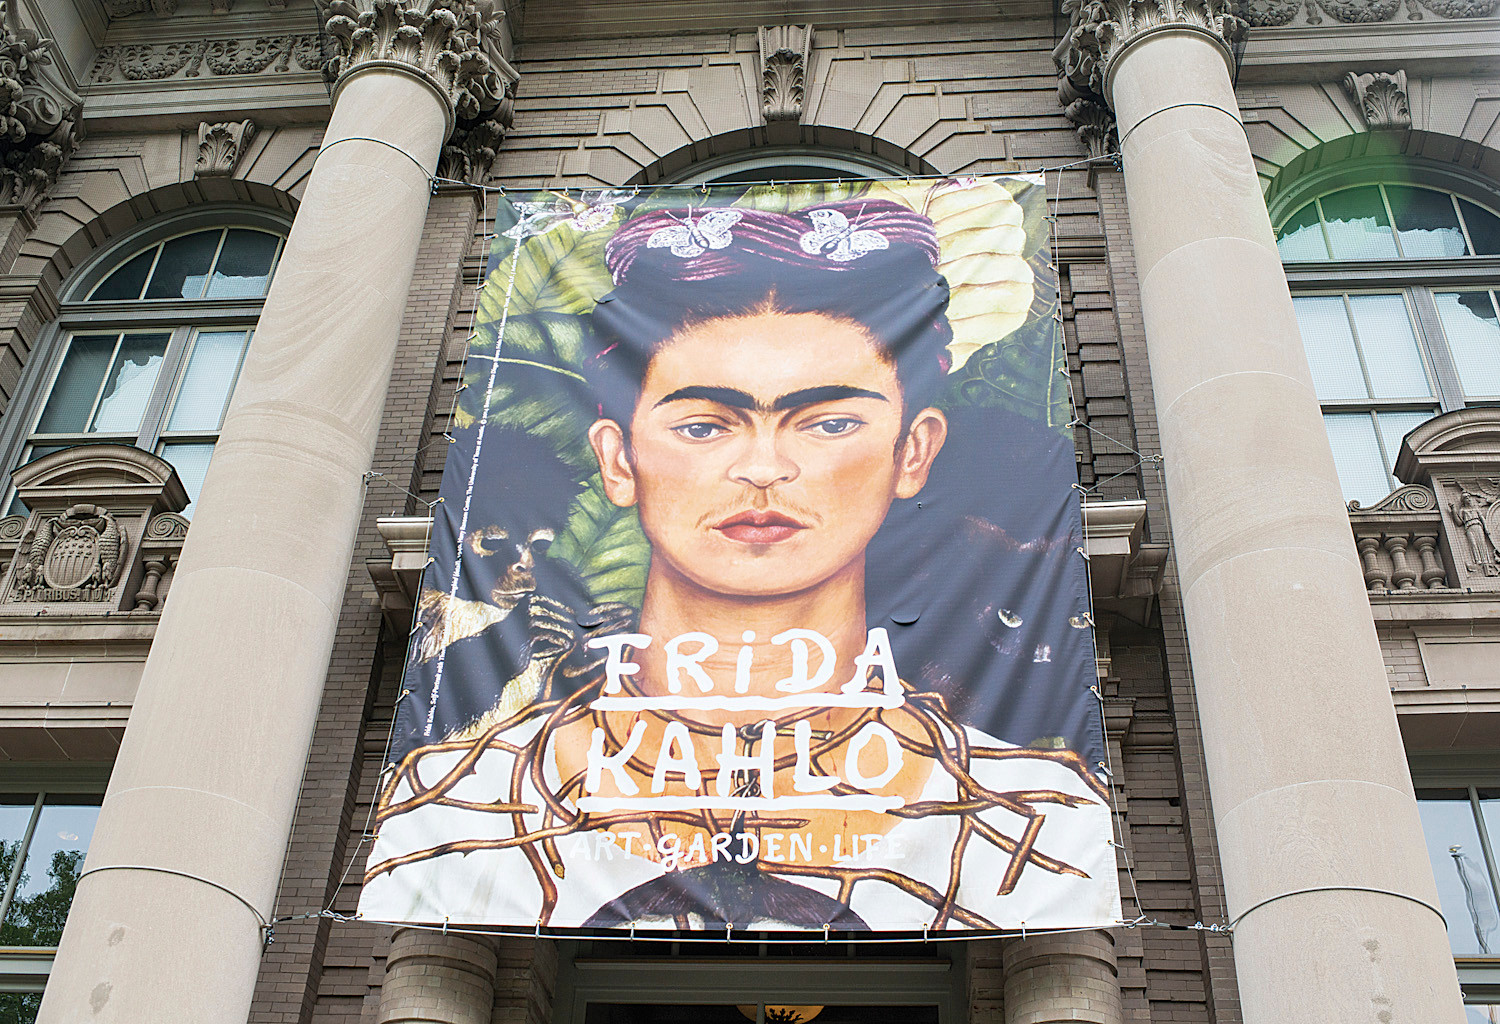 A large Frida Kahlo print hangs over the Britton Rotunda entrance.